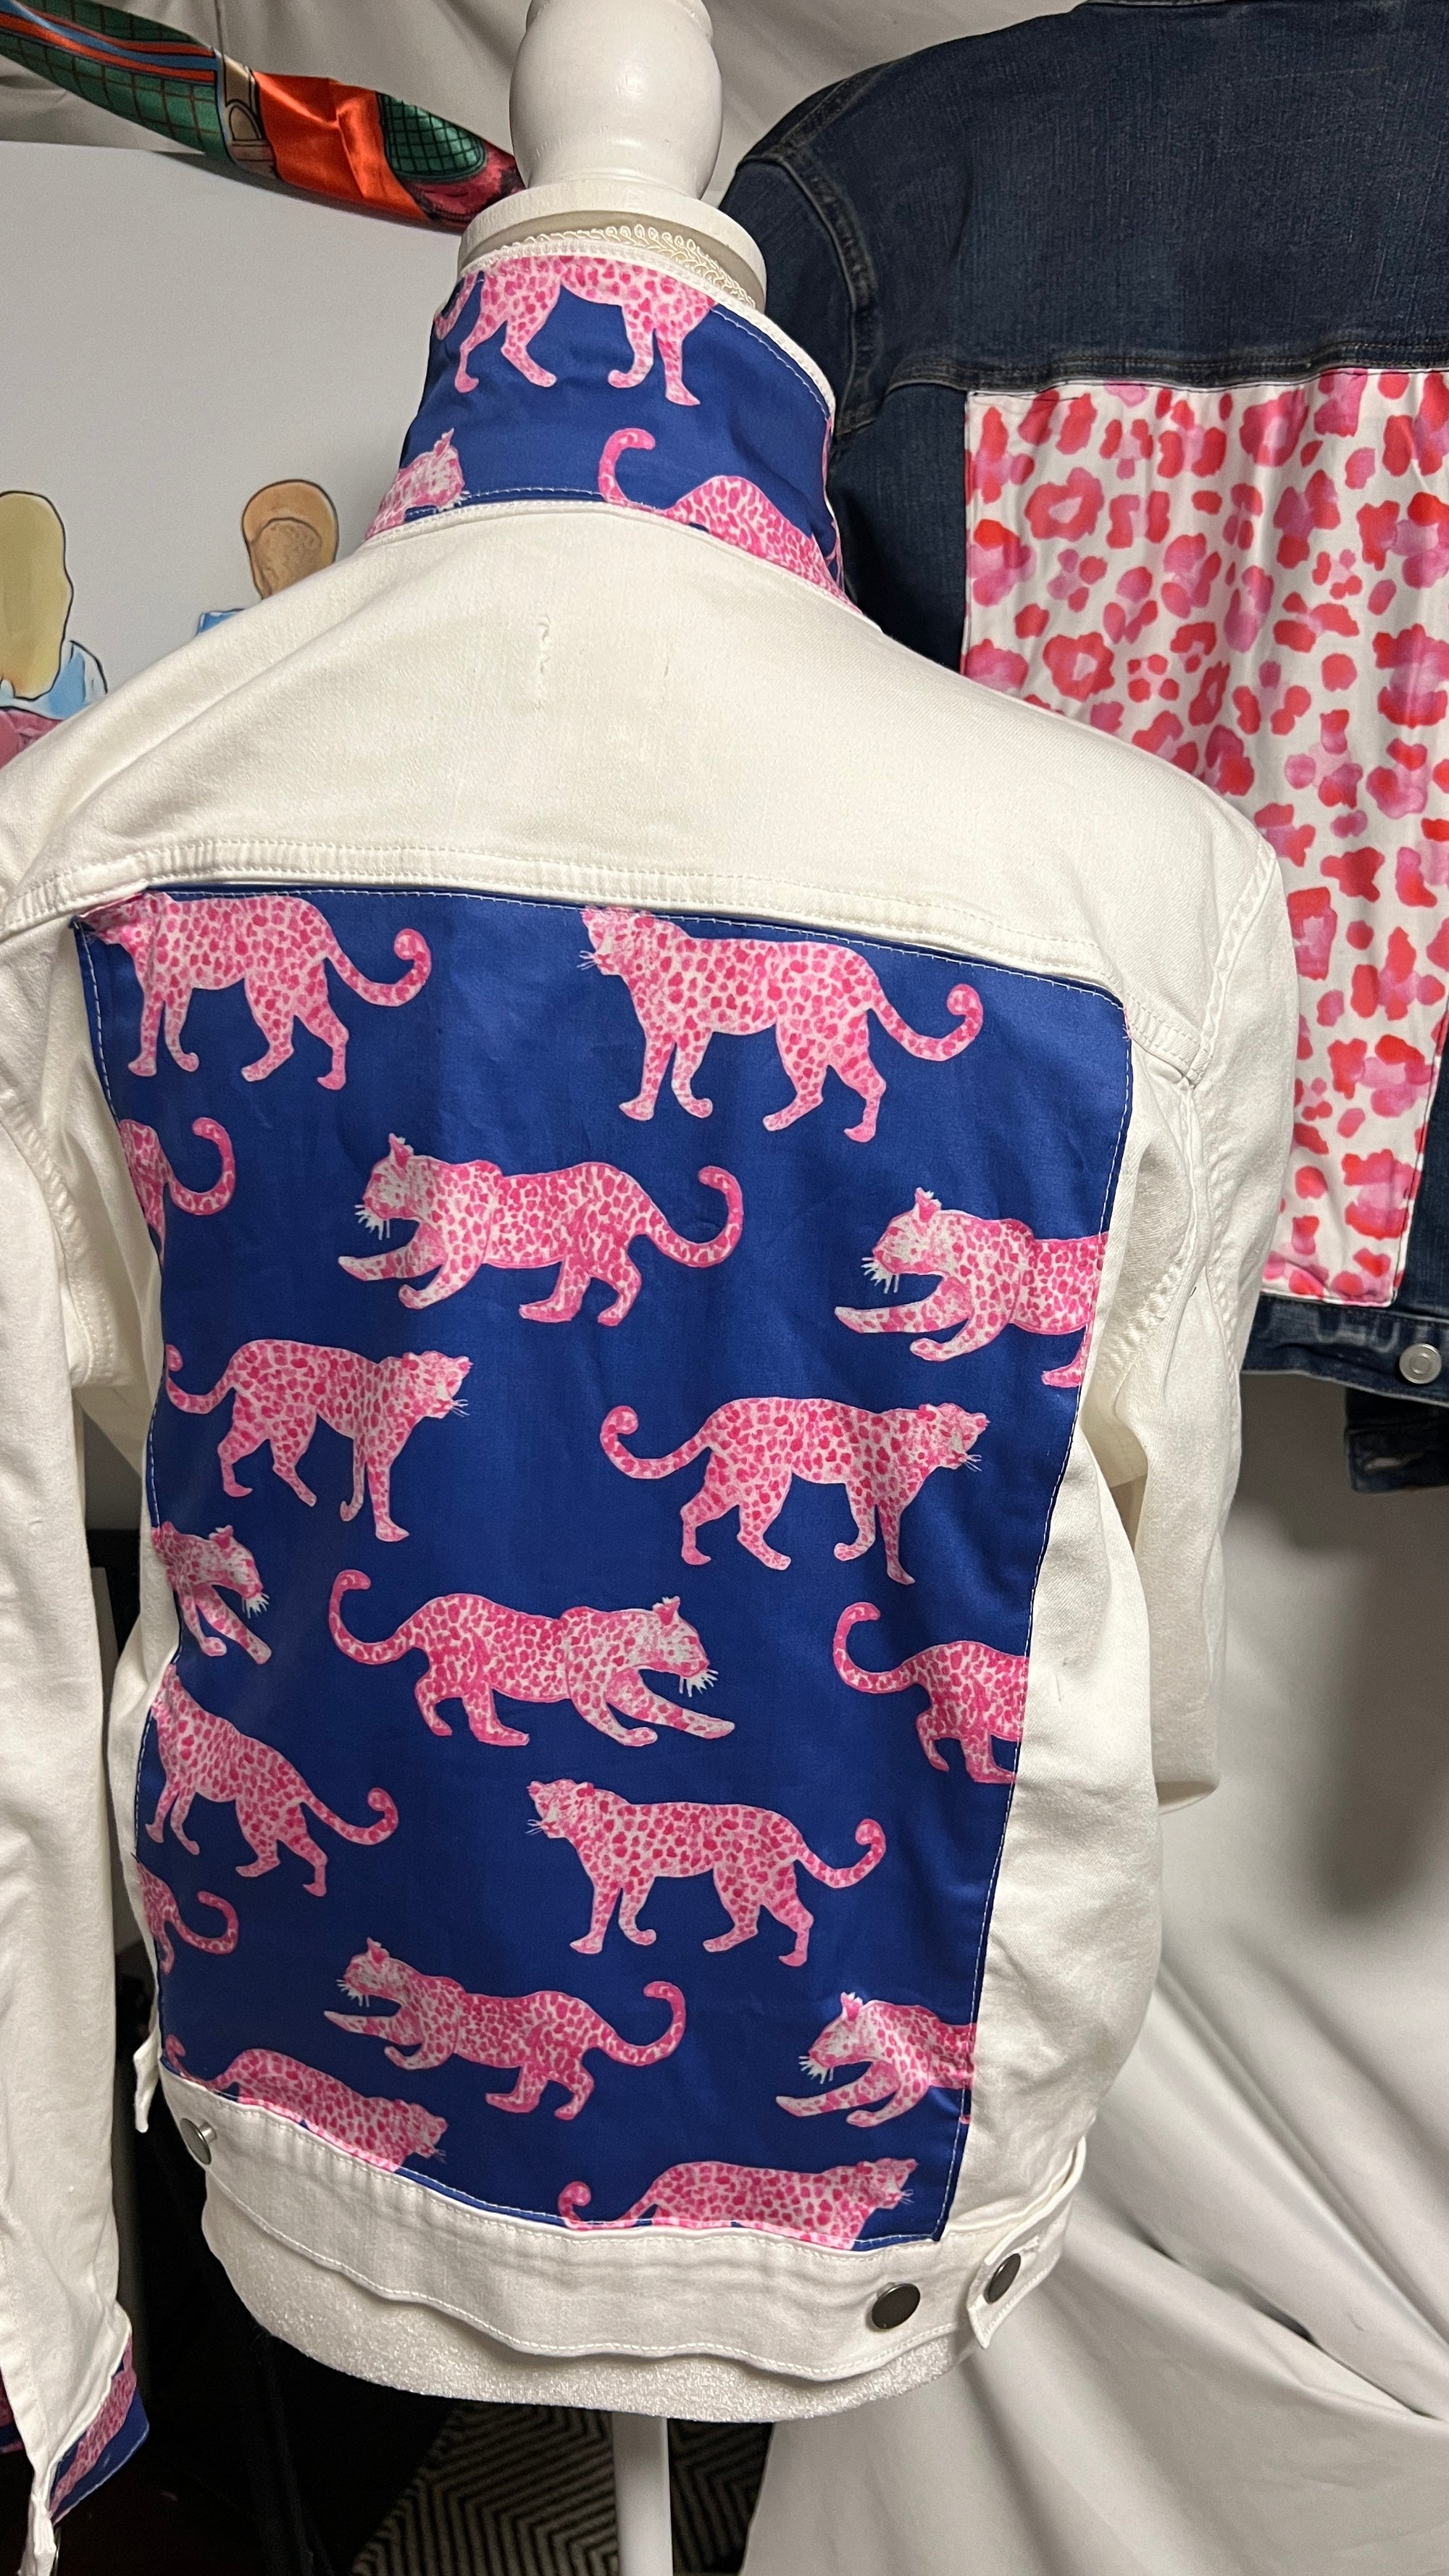 Hot Pink Leopards on Blue background